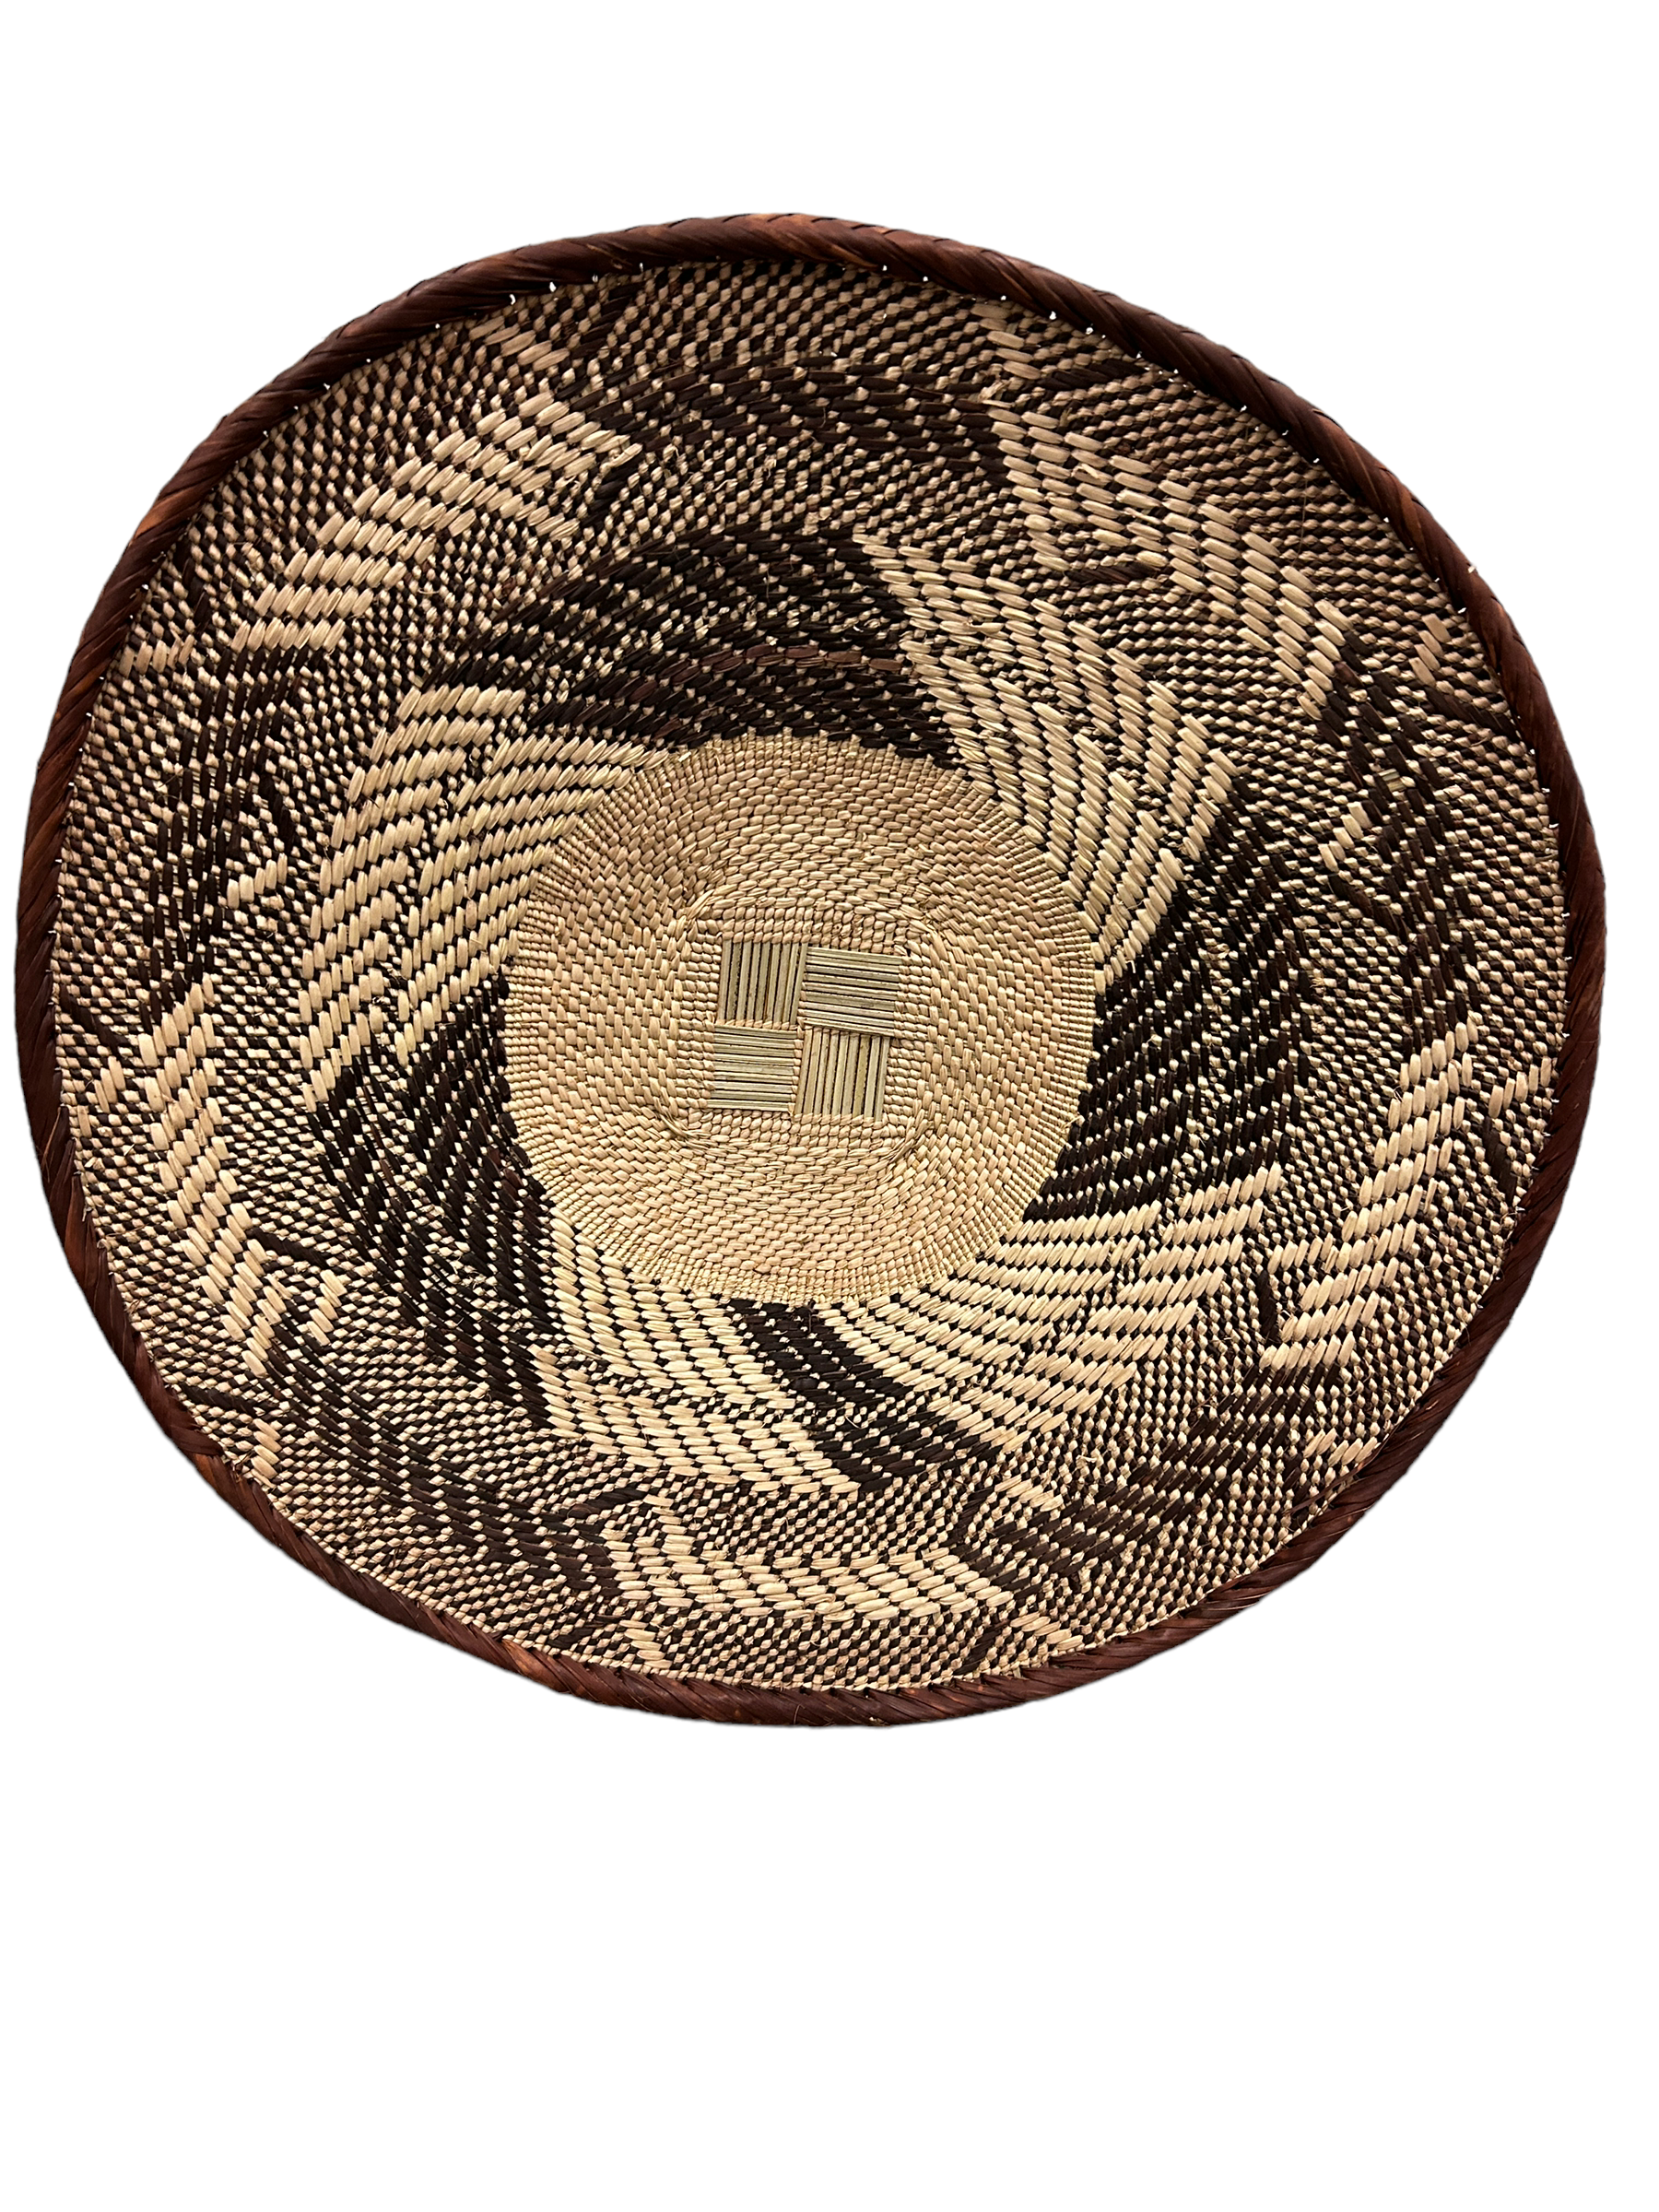 botanicalboysuk Tonga Basket Natural (50-05)